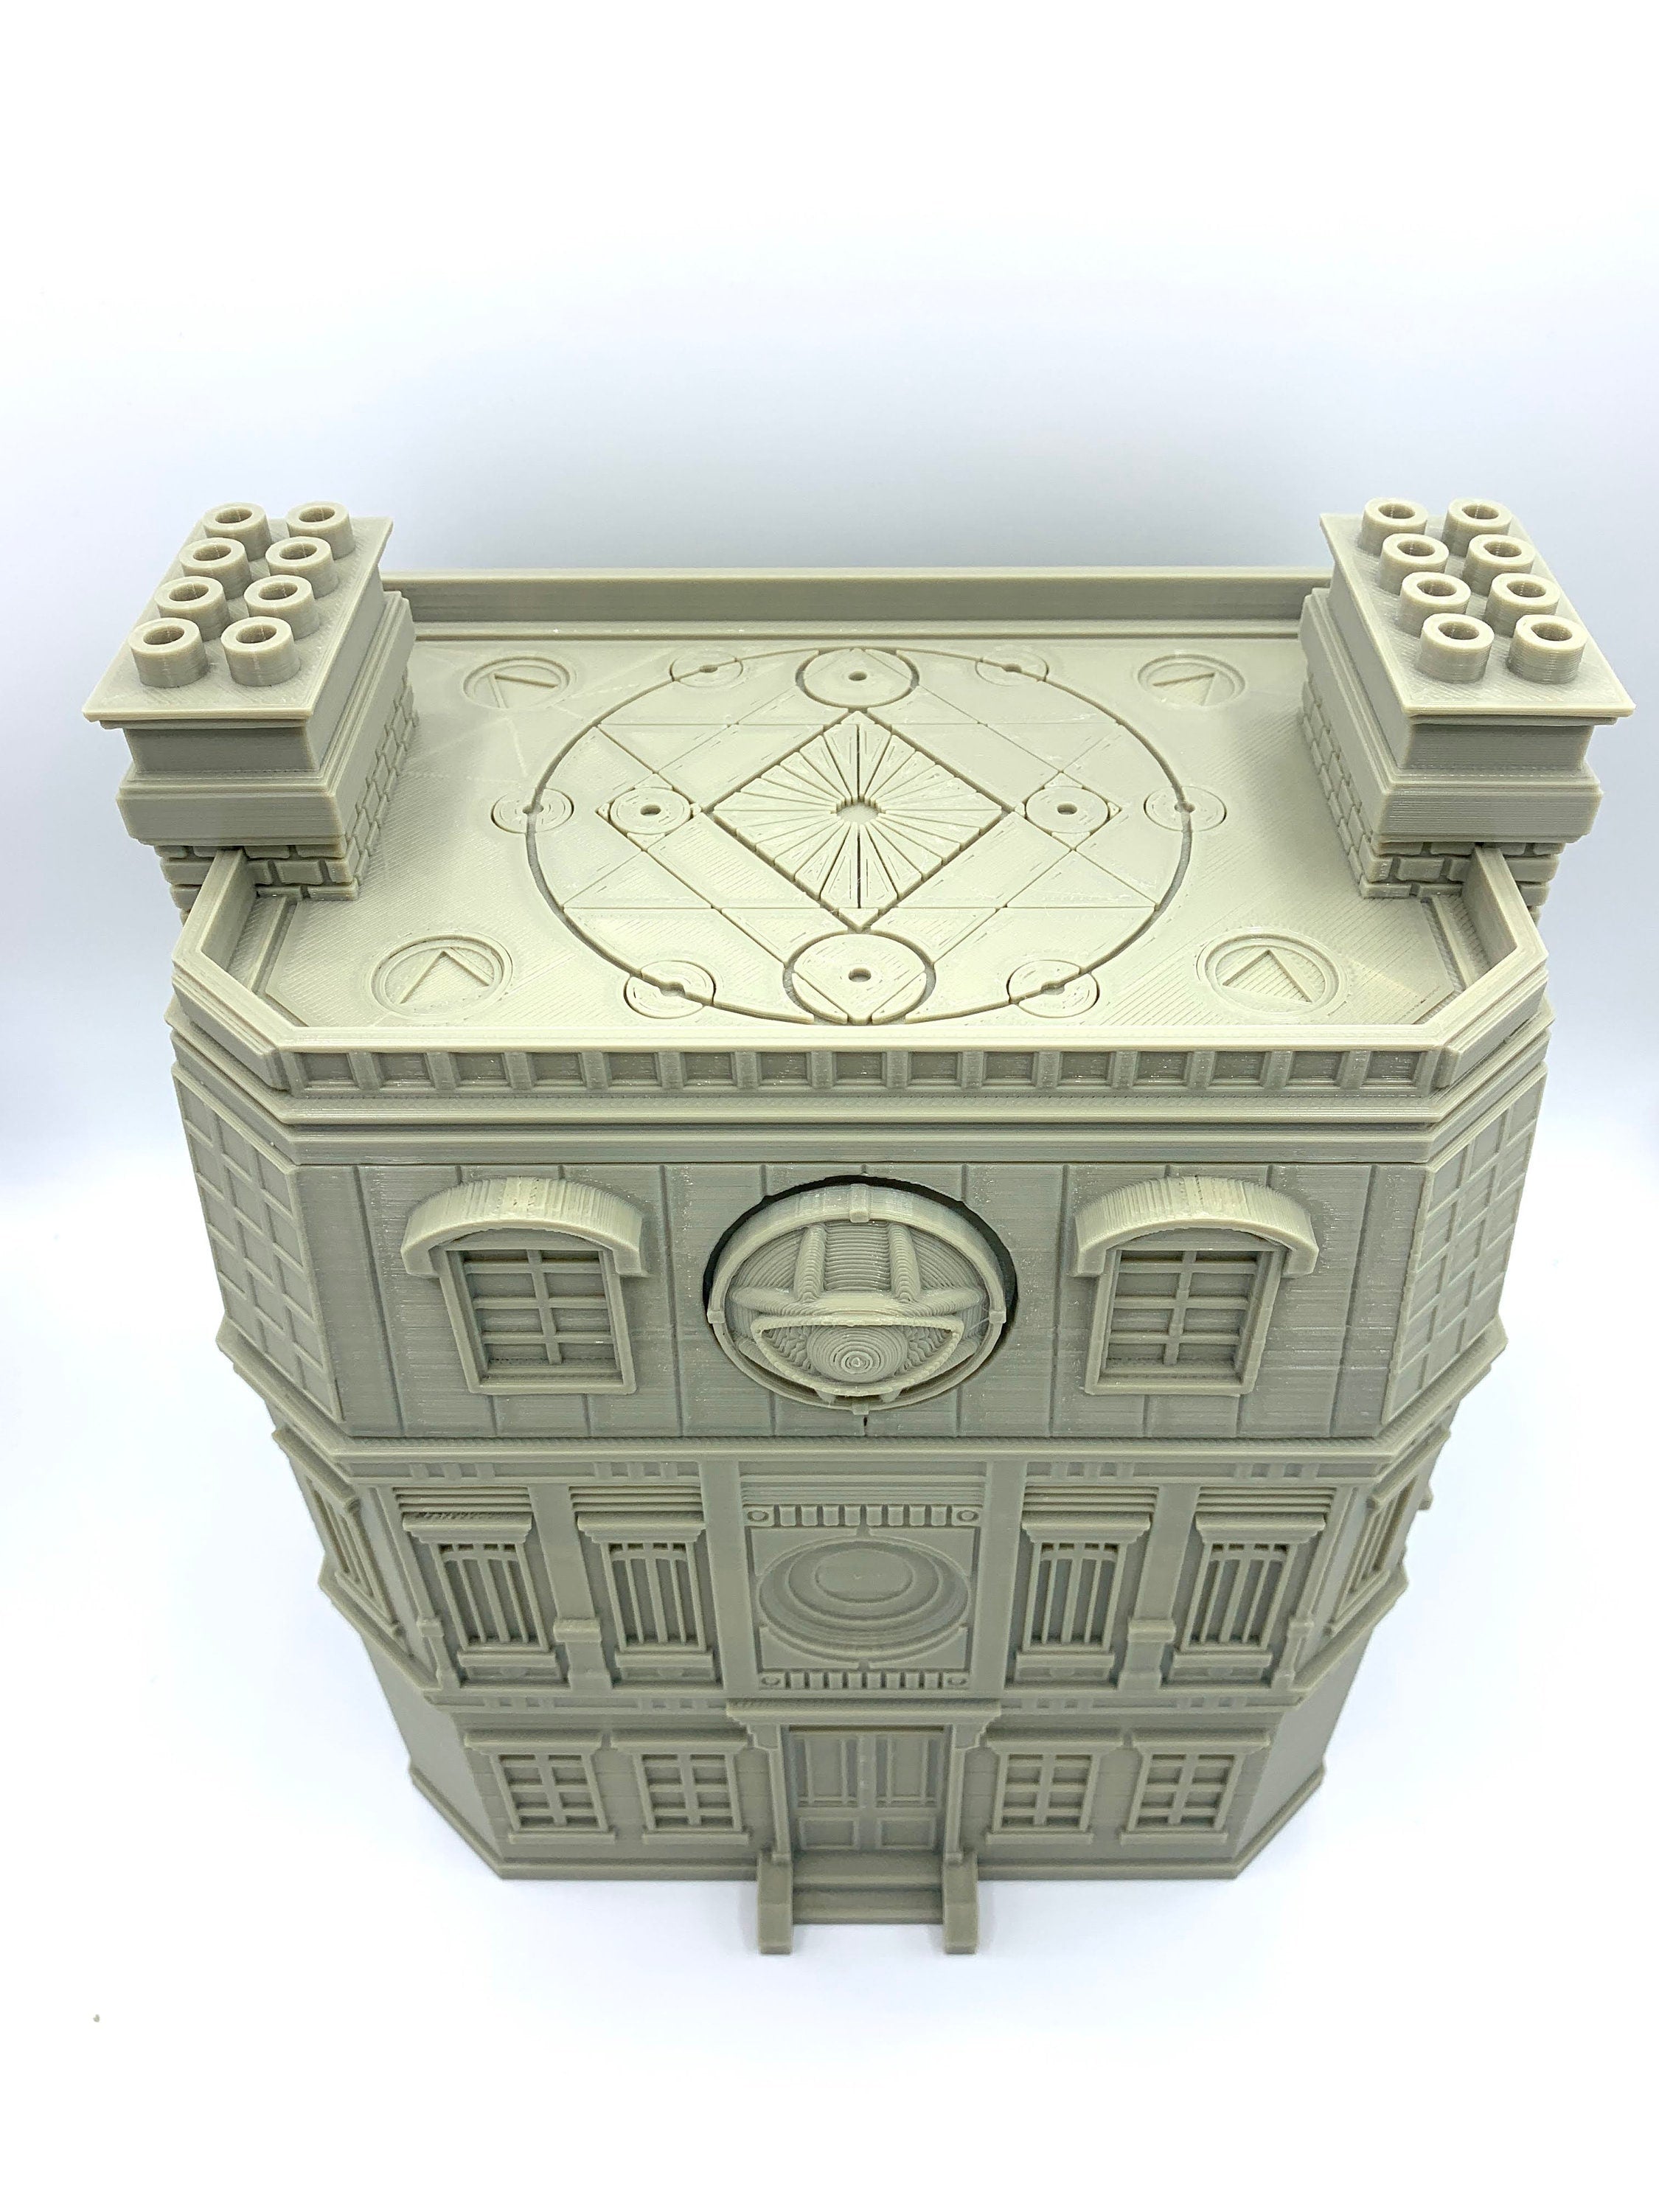 3d Printed Urban Mystical House / Crisis Protocol Compatible Option / Corvus Games Terrain Licensed Printer / Print to Order